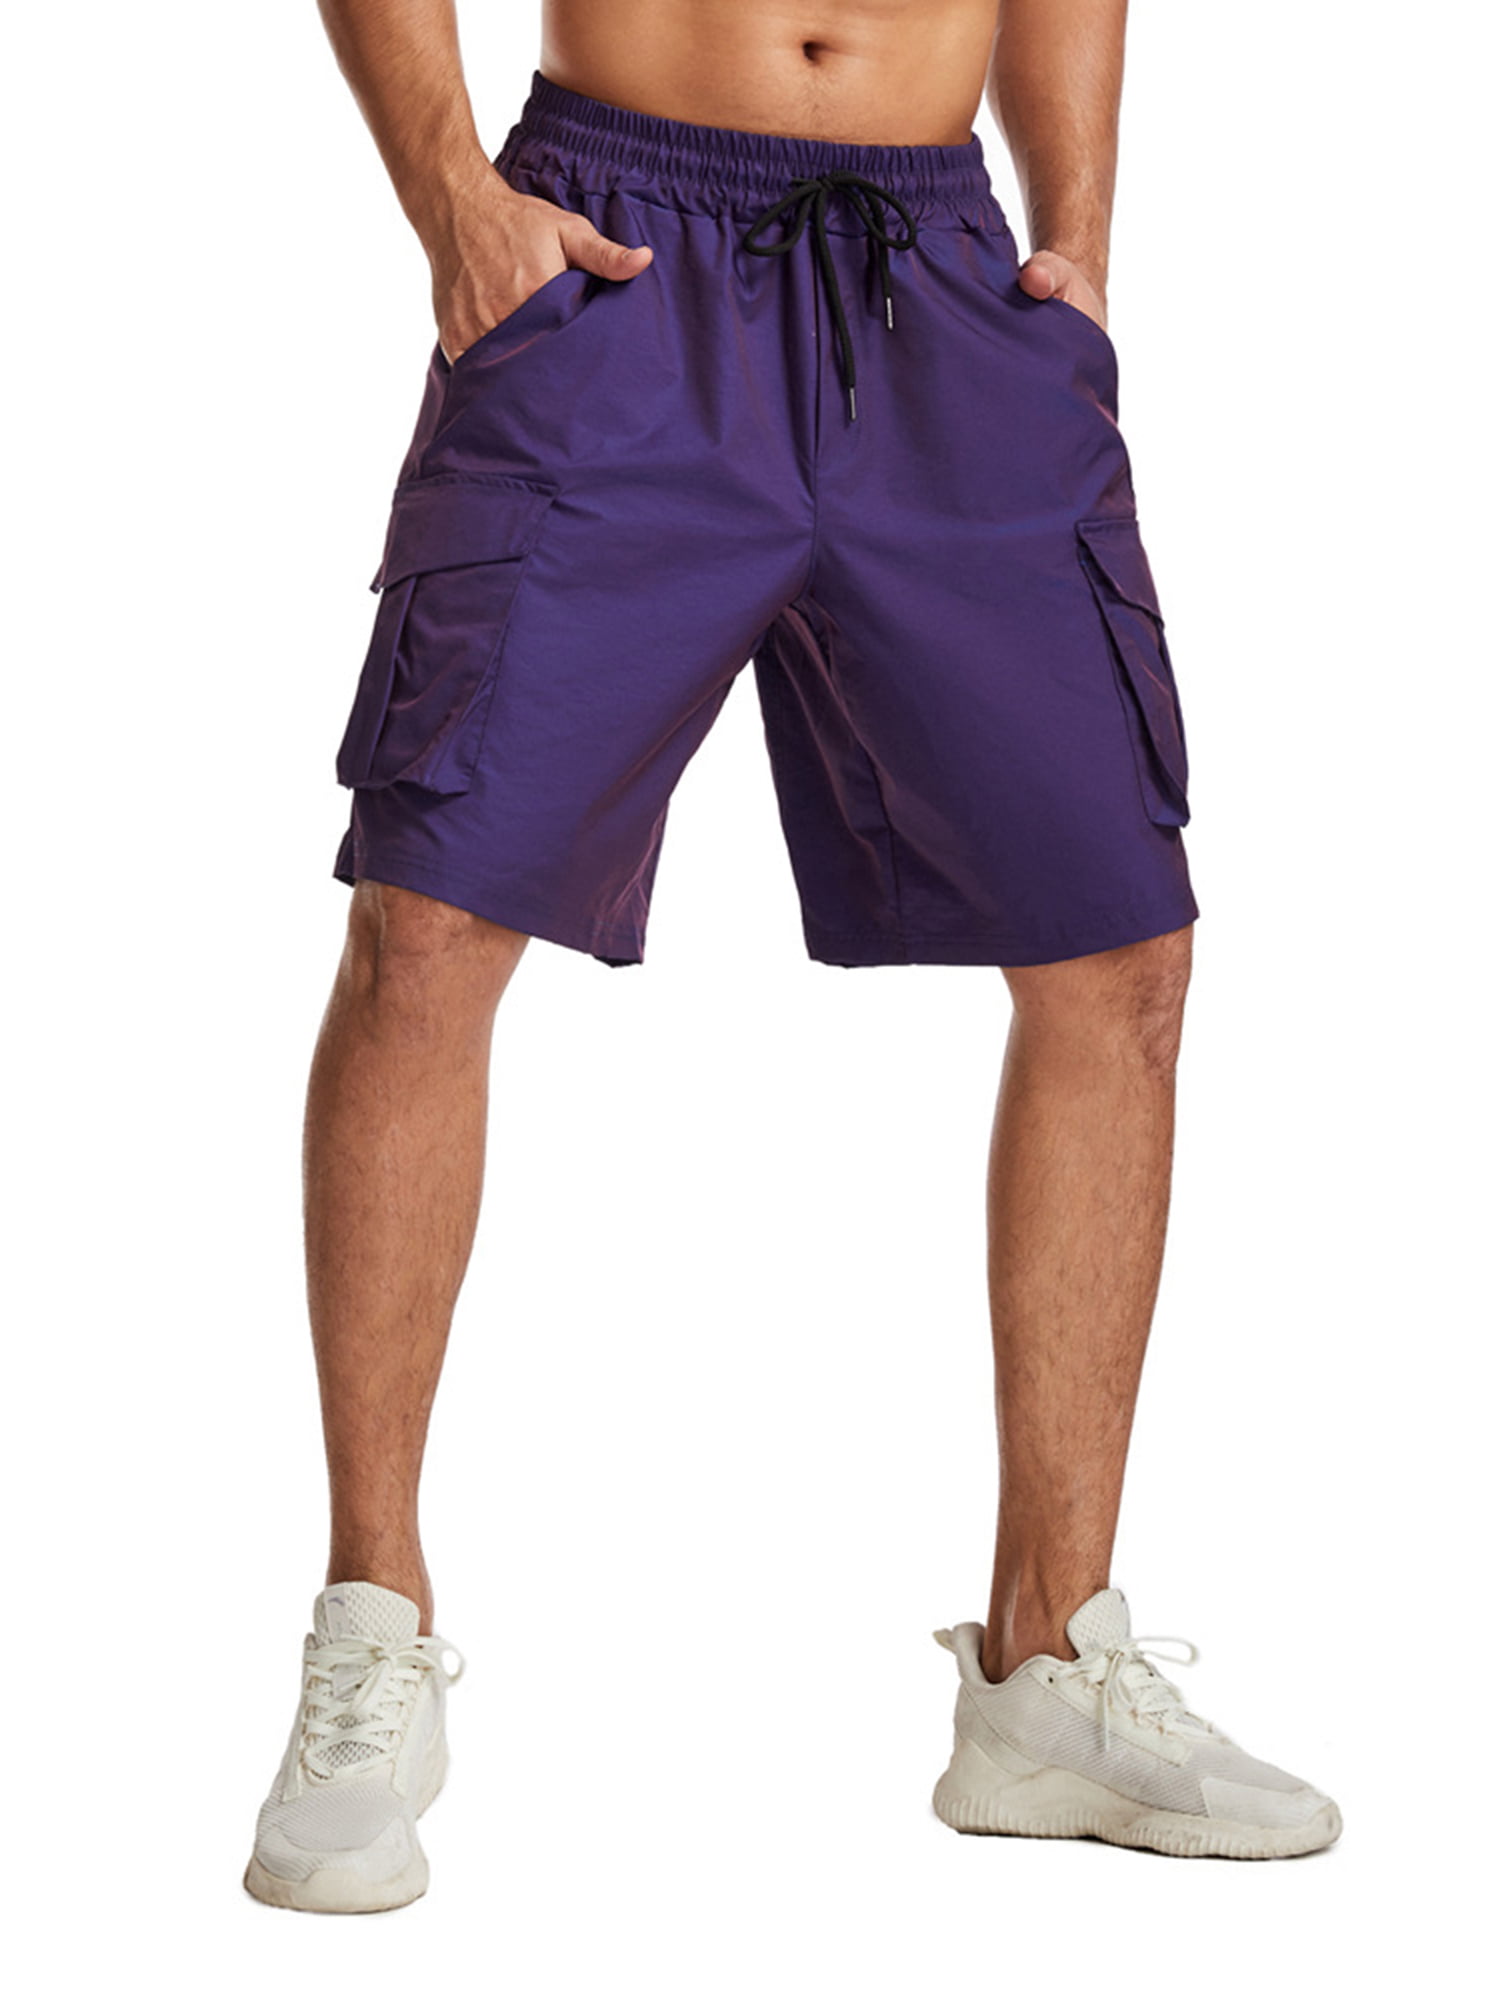 Picasso Sophie Eik wybzd Men Summer Sport Cargo Shorts Quick Dry Workout Athletic Shorts Night  Jogger Short Pants with Pockets Purple XL - Walmart.com